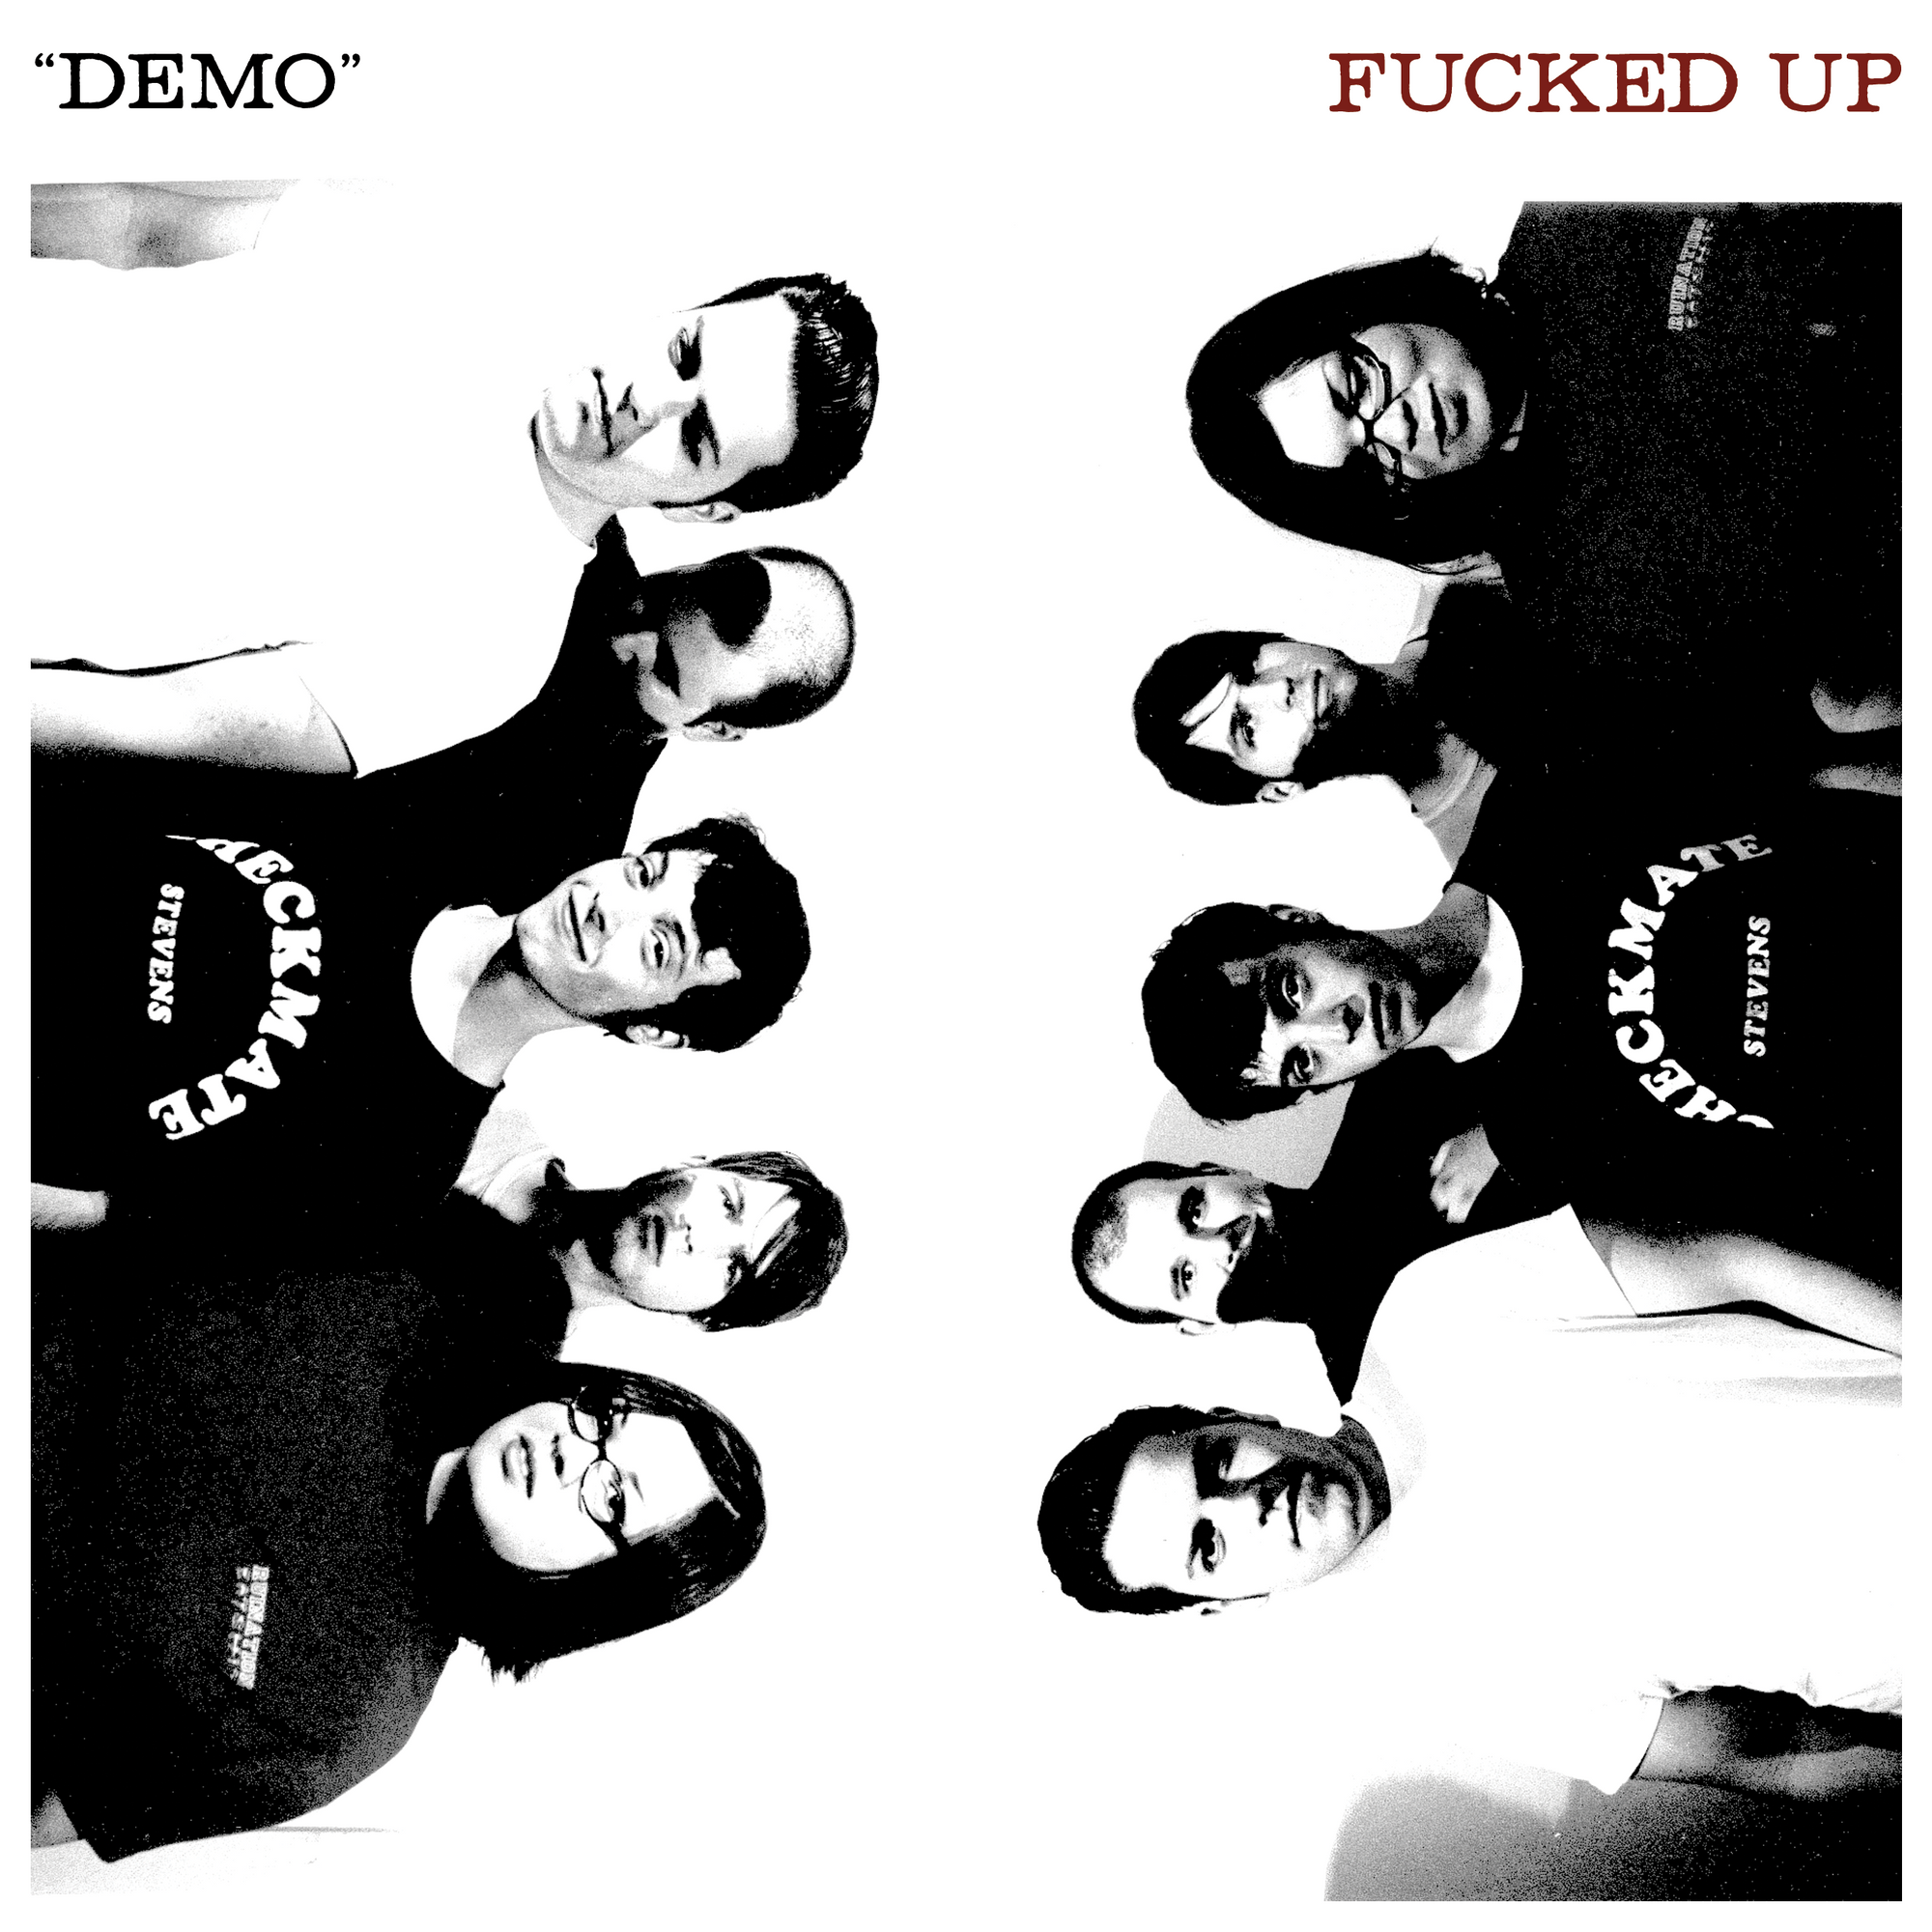 Fucked Up "Demos" 7inch